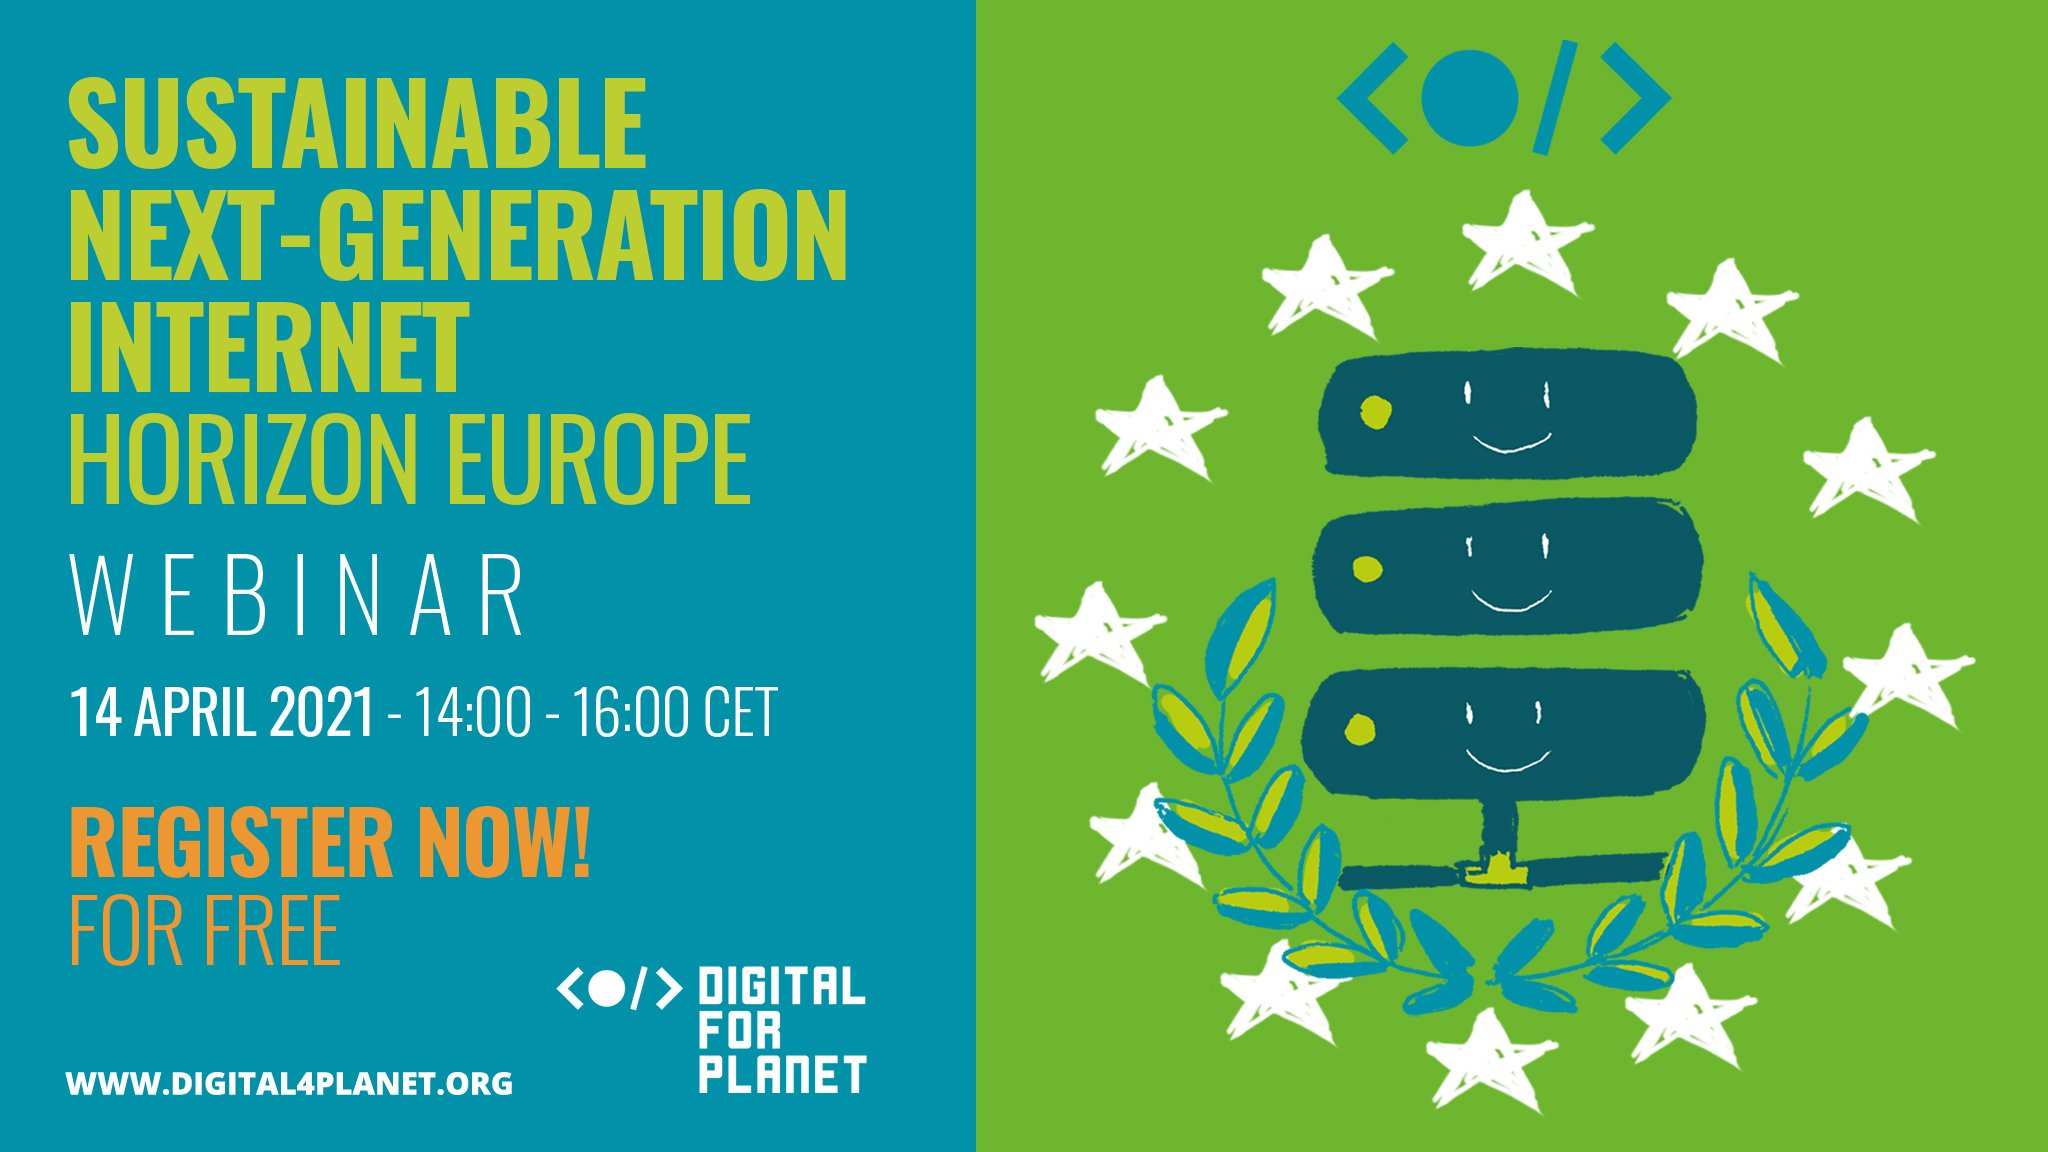 Digital For Planet | Sustainable Next Generation Internet Horizon Europe webinar